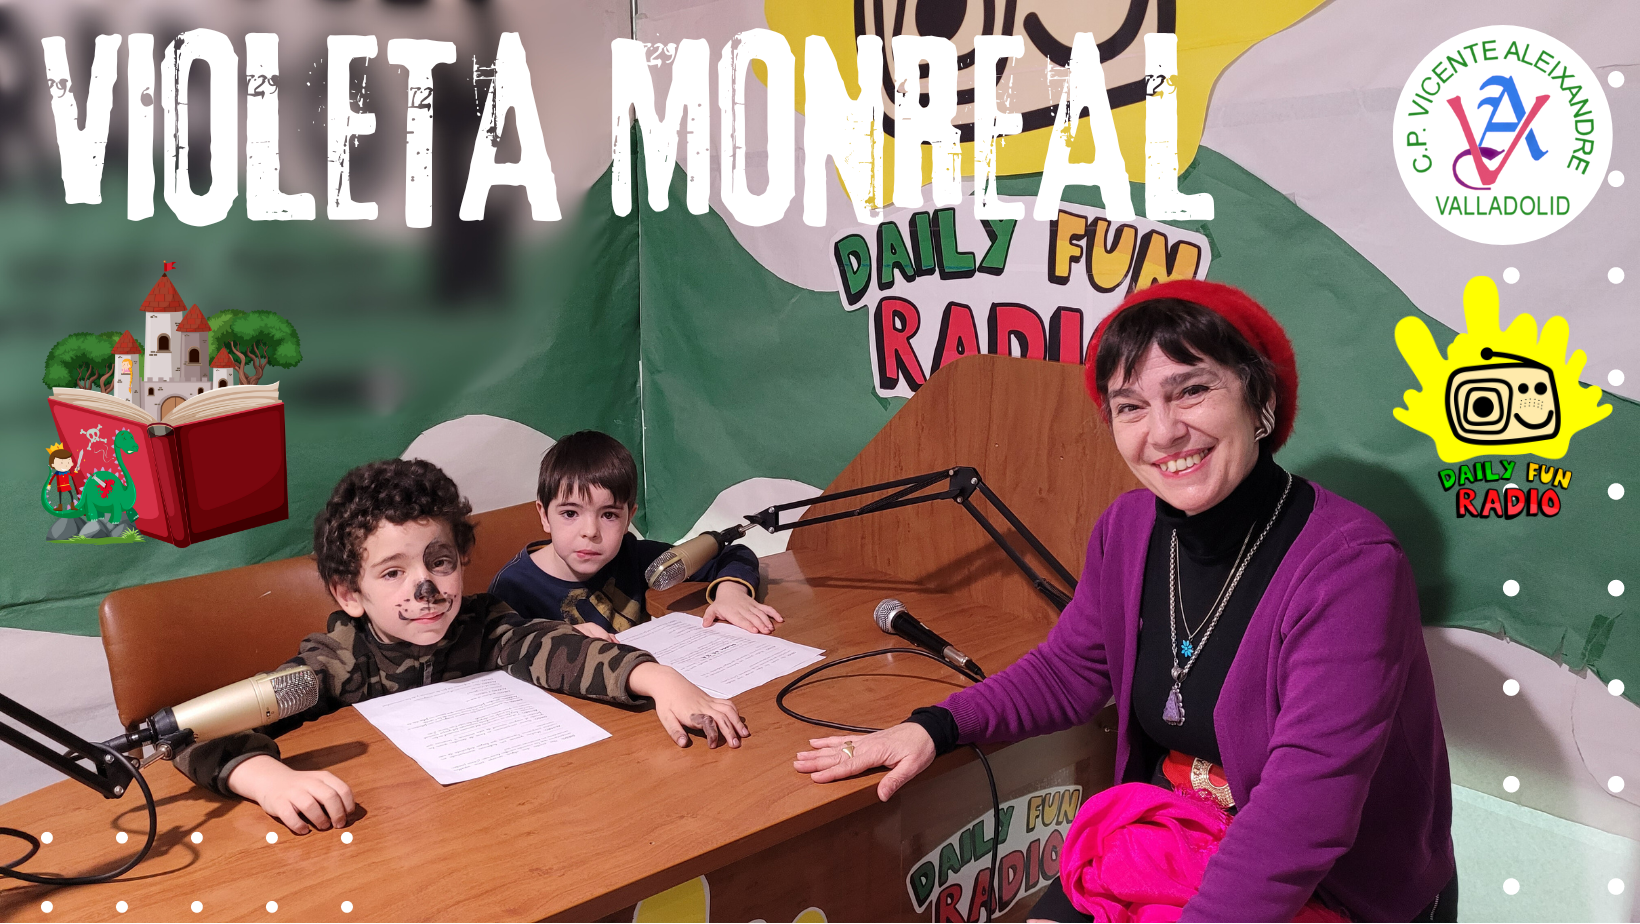 Daily Fun Radio Violeta Monreal